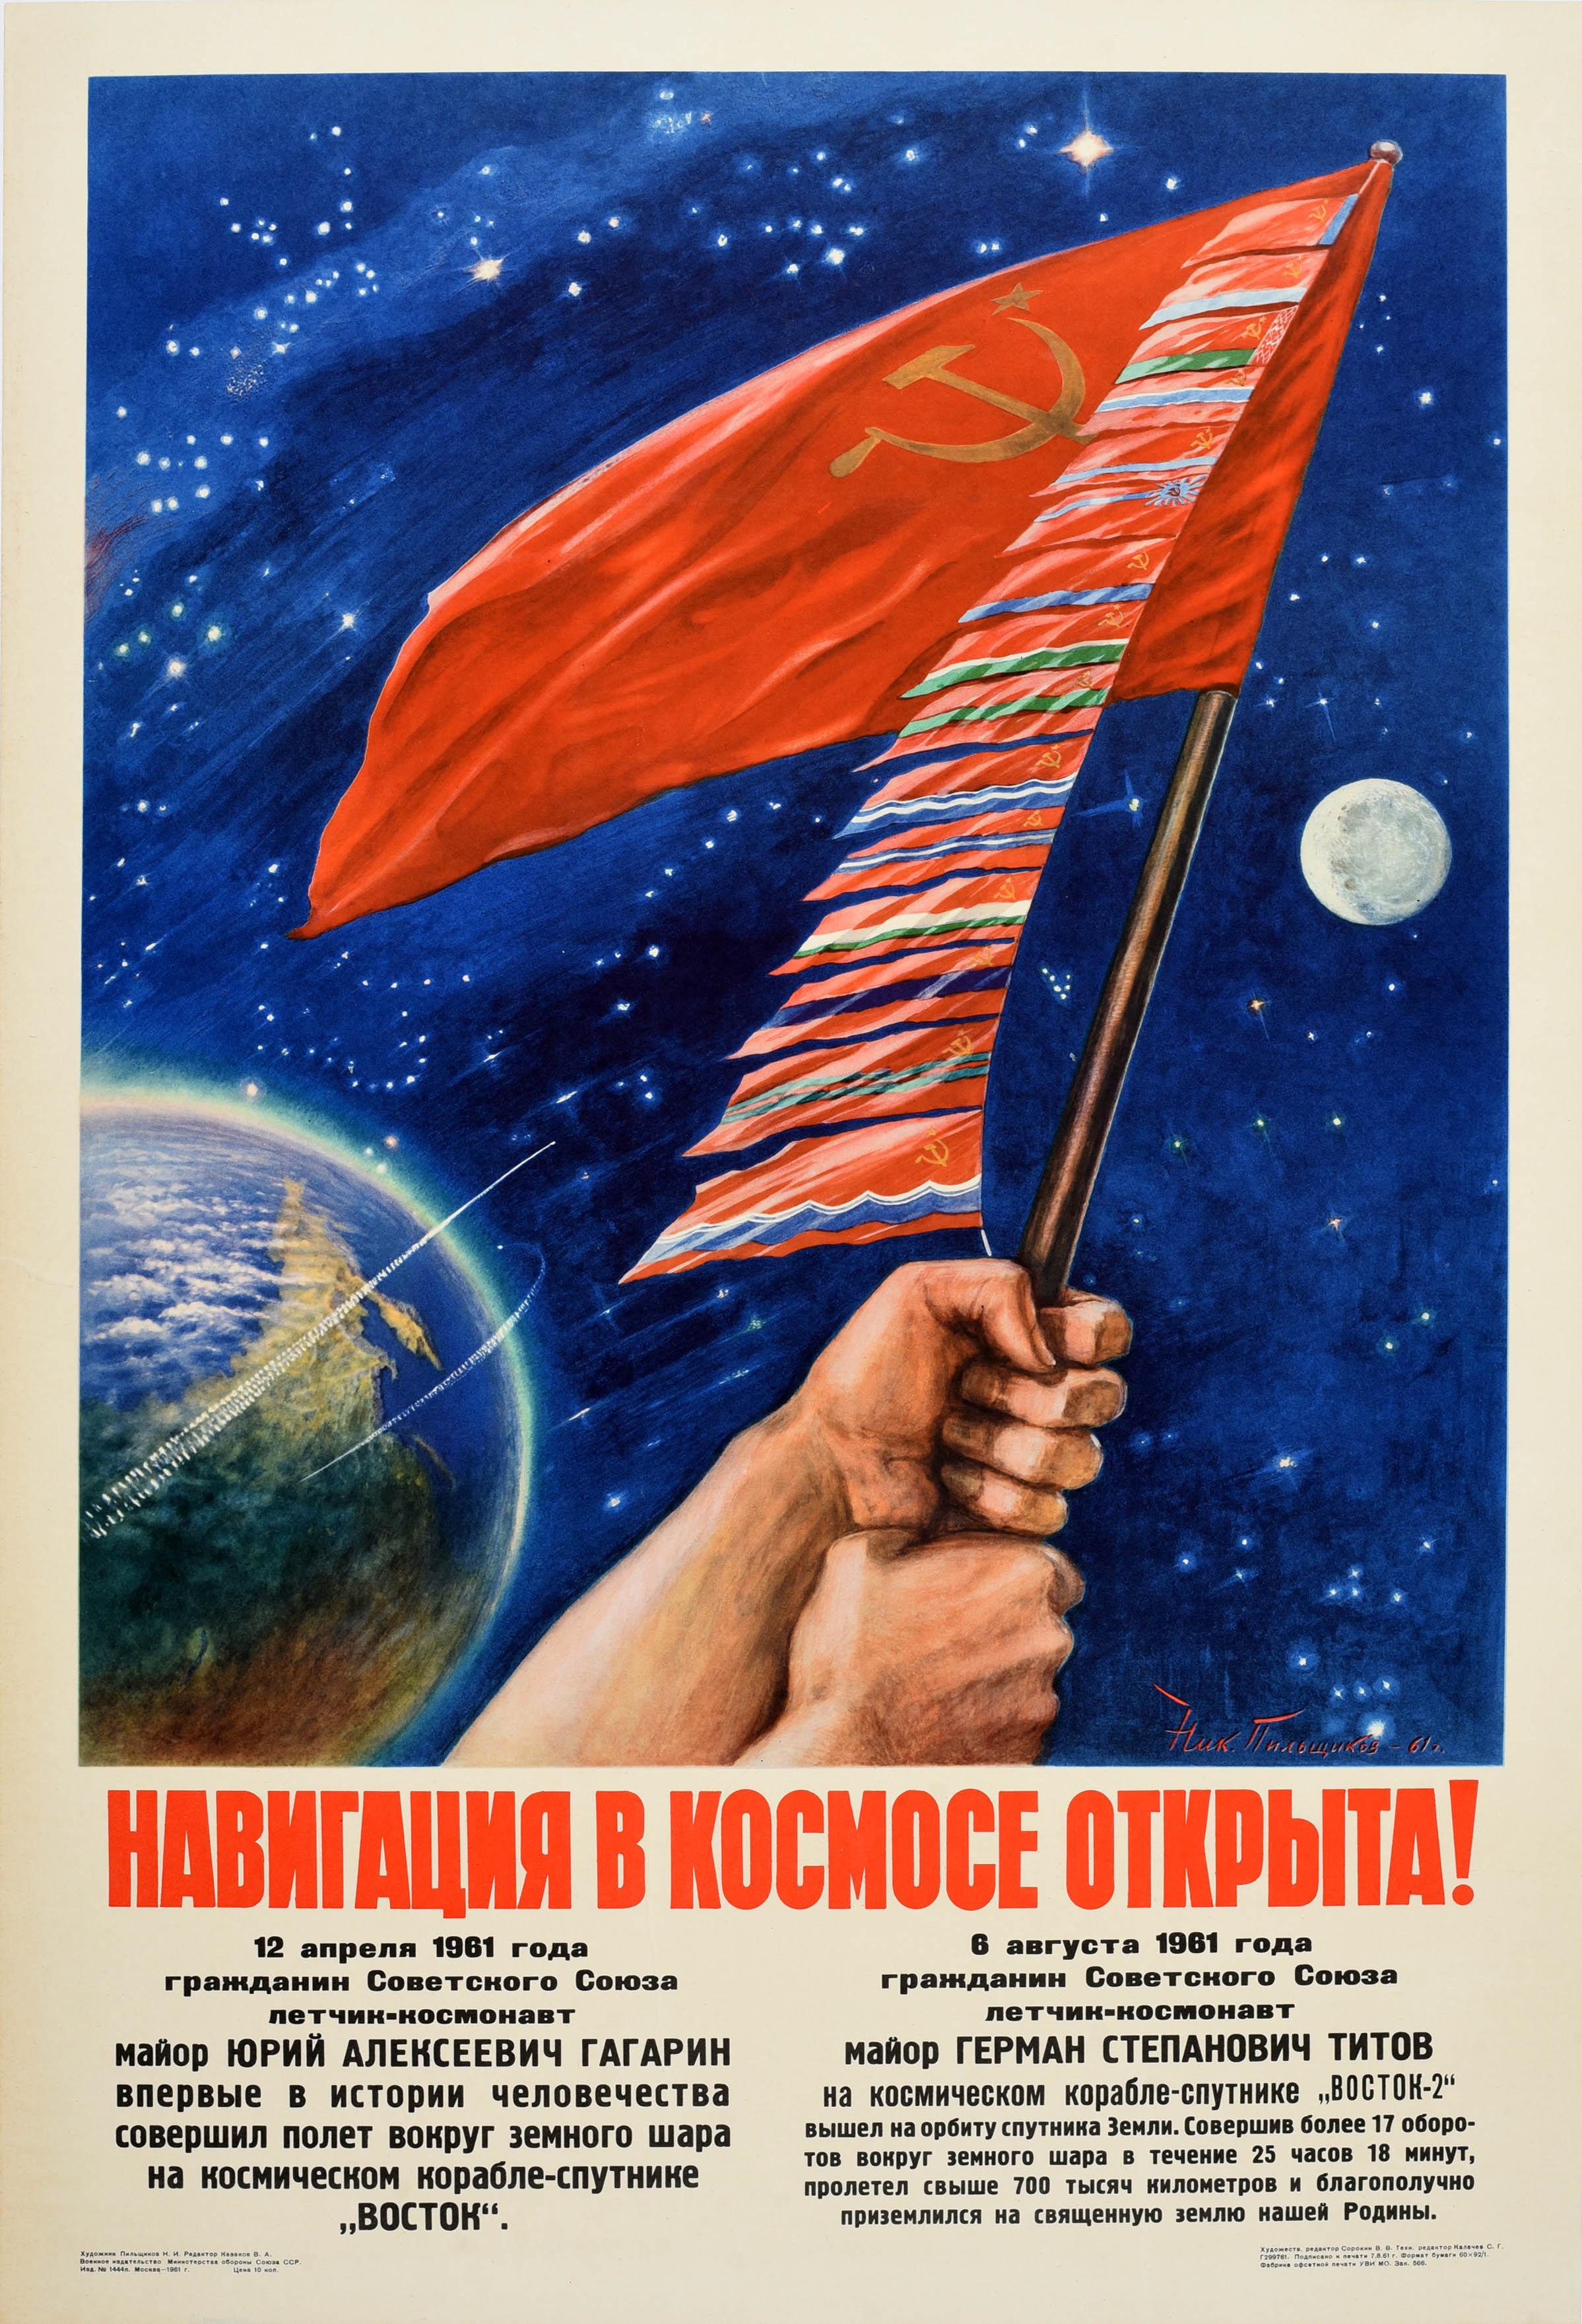 Print Pilshchikov - Affiche vintage d'origine Navigation In Open Space Race, Kosmos, URSS, Gagarin Titov